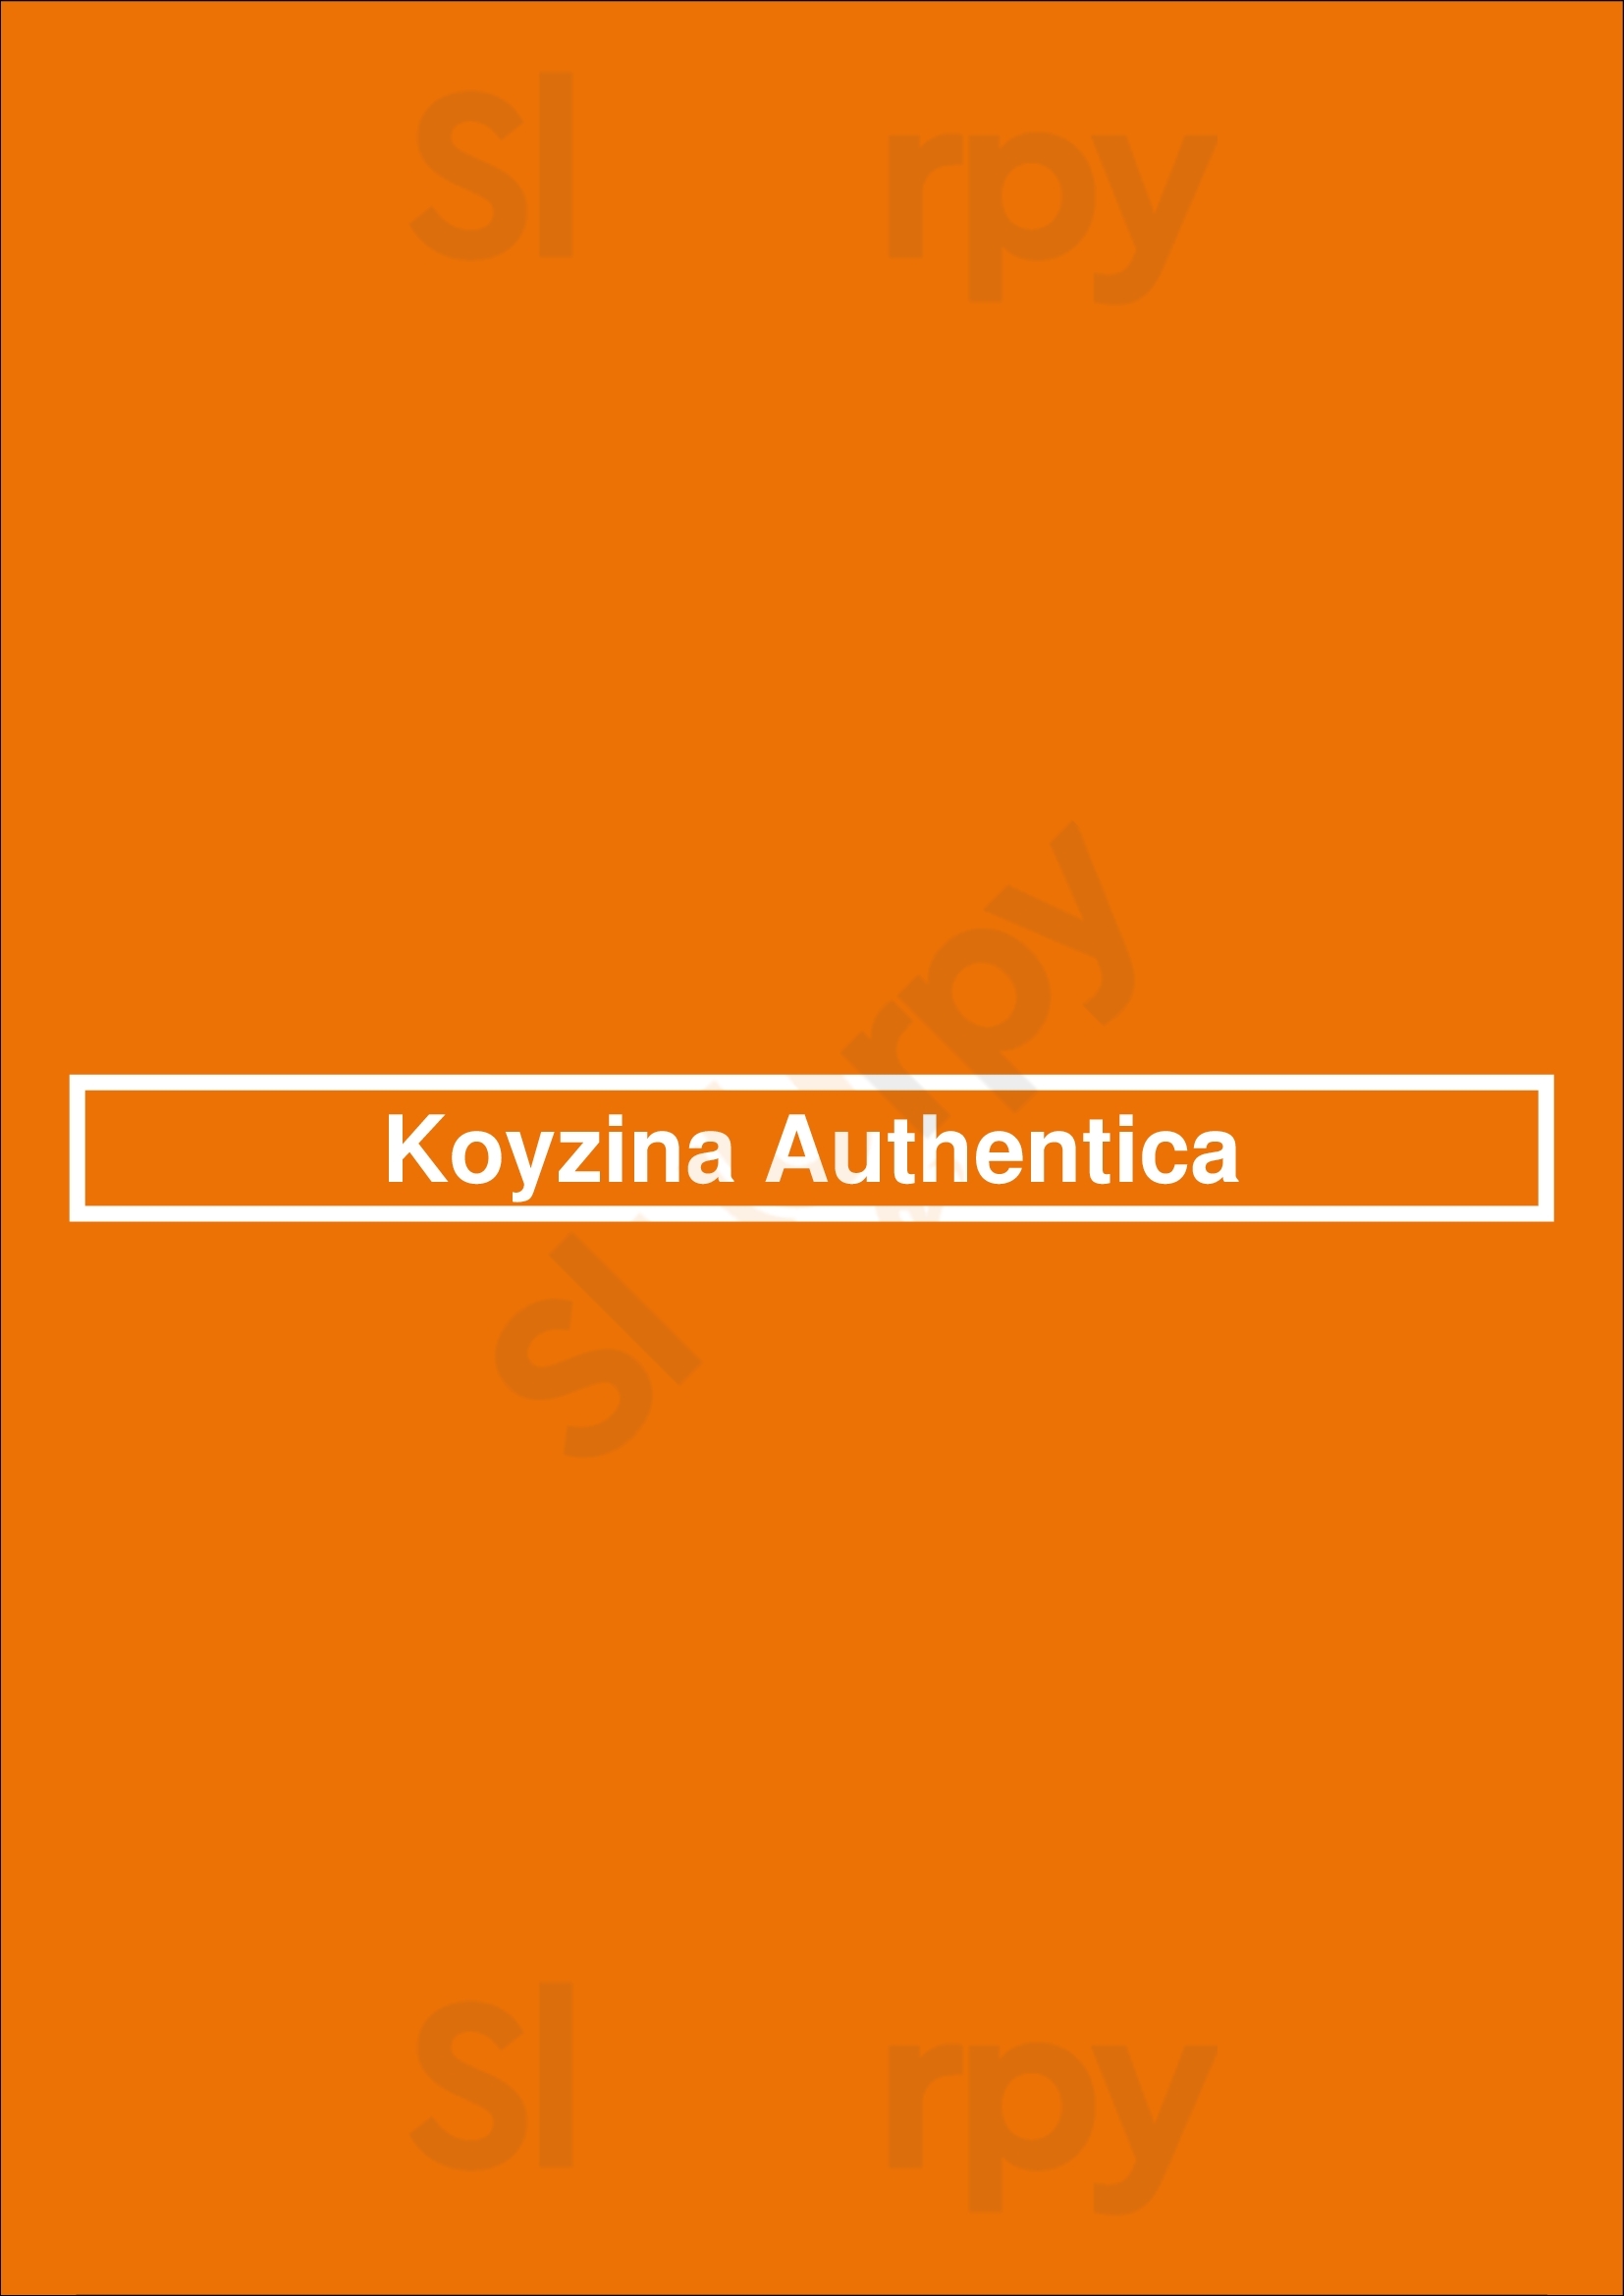 Koyzina Authentica Uccle Menu - 1